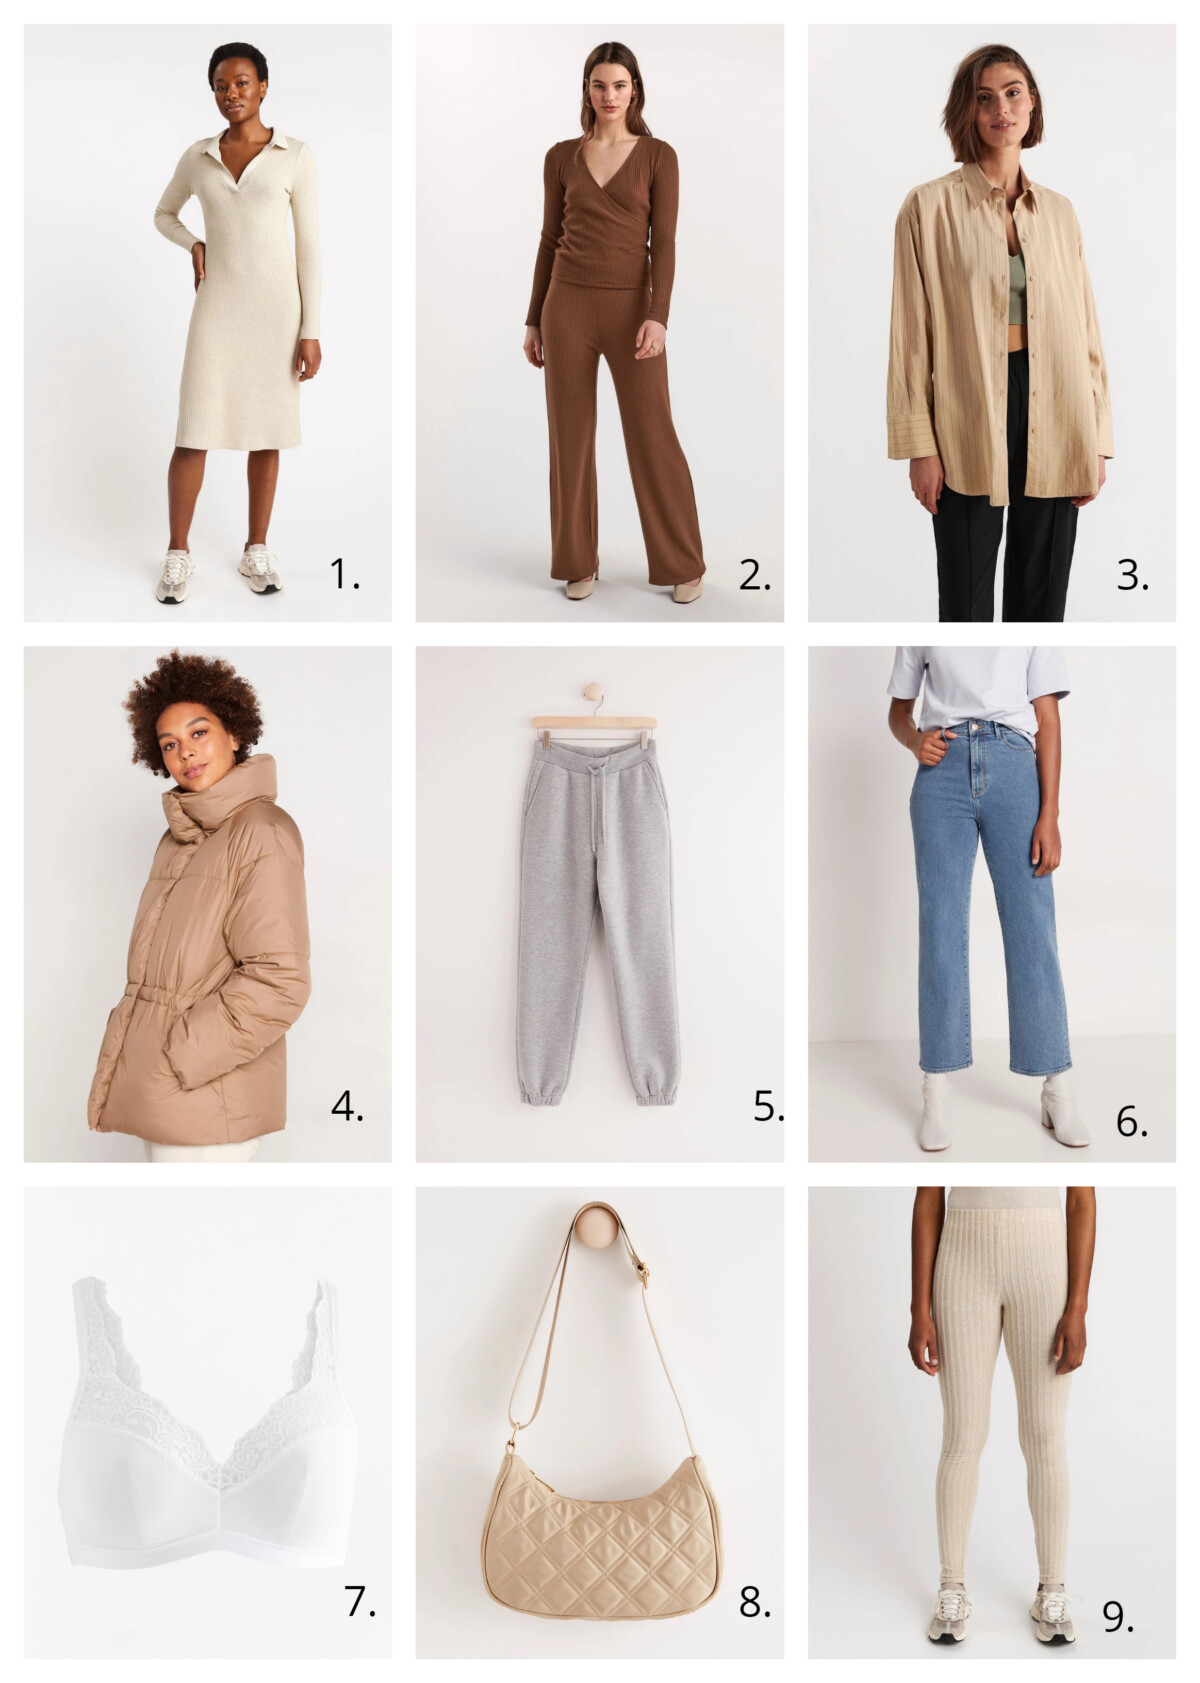 newin-innkjøp-shopping-kjøp-shop-nettshopping-handel-lindex-fashion-style-trend-mote-stil-klær-beige-svart-isalicious-isalicious1-blogg-blogging-blog-isalicious.blogg.no-antrekk-outfit-want-wants